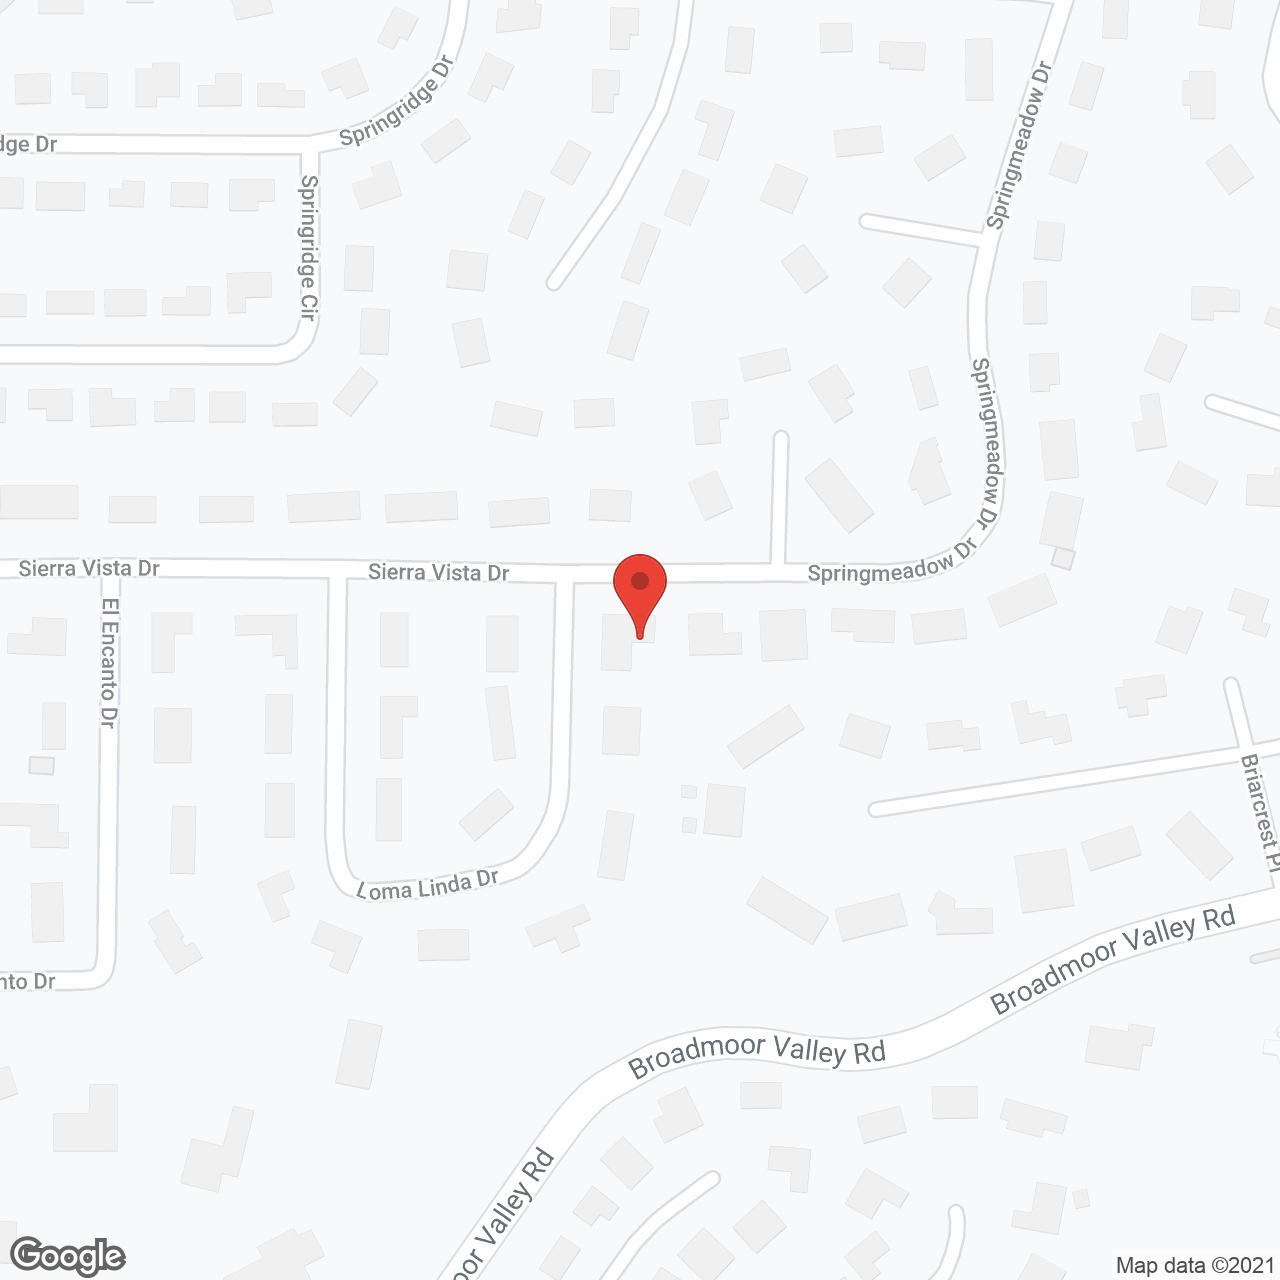 Constant Care Loma Linda in google map